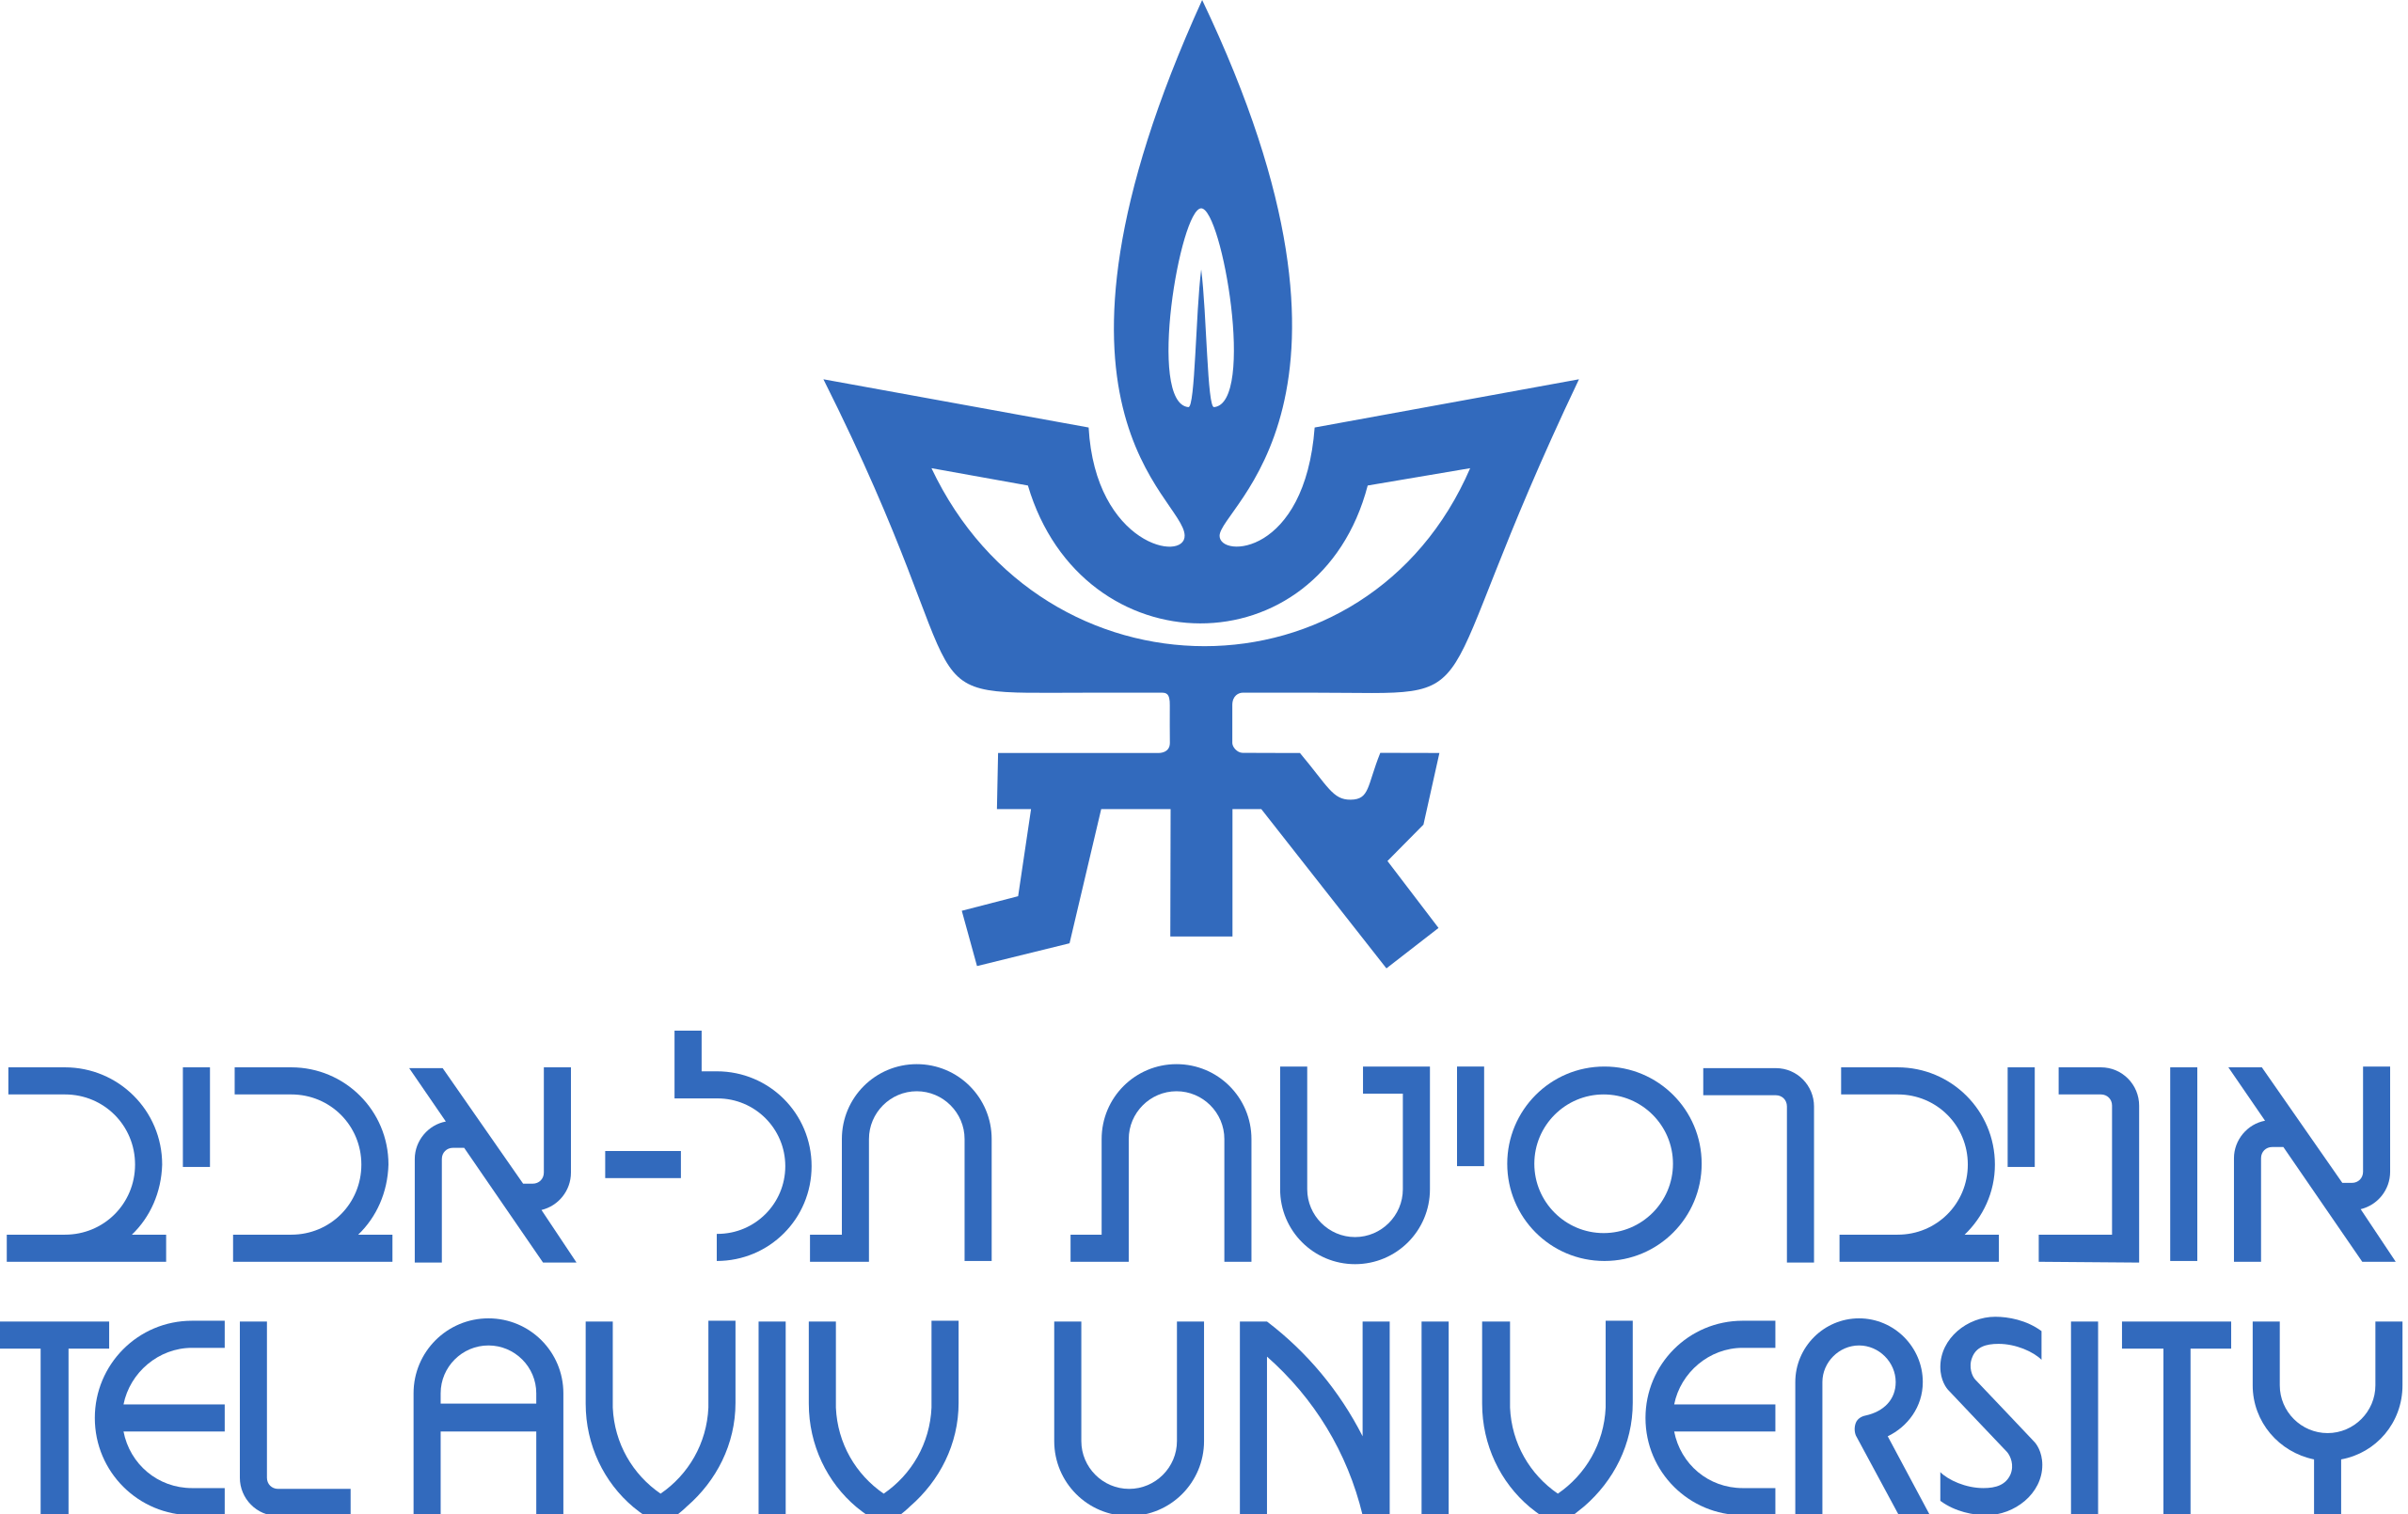 2560px-Tel_aviv_university.svg